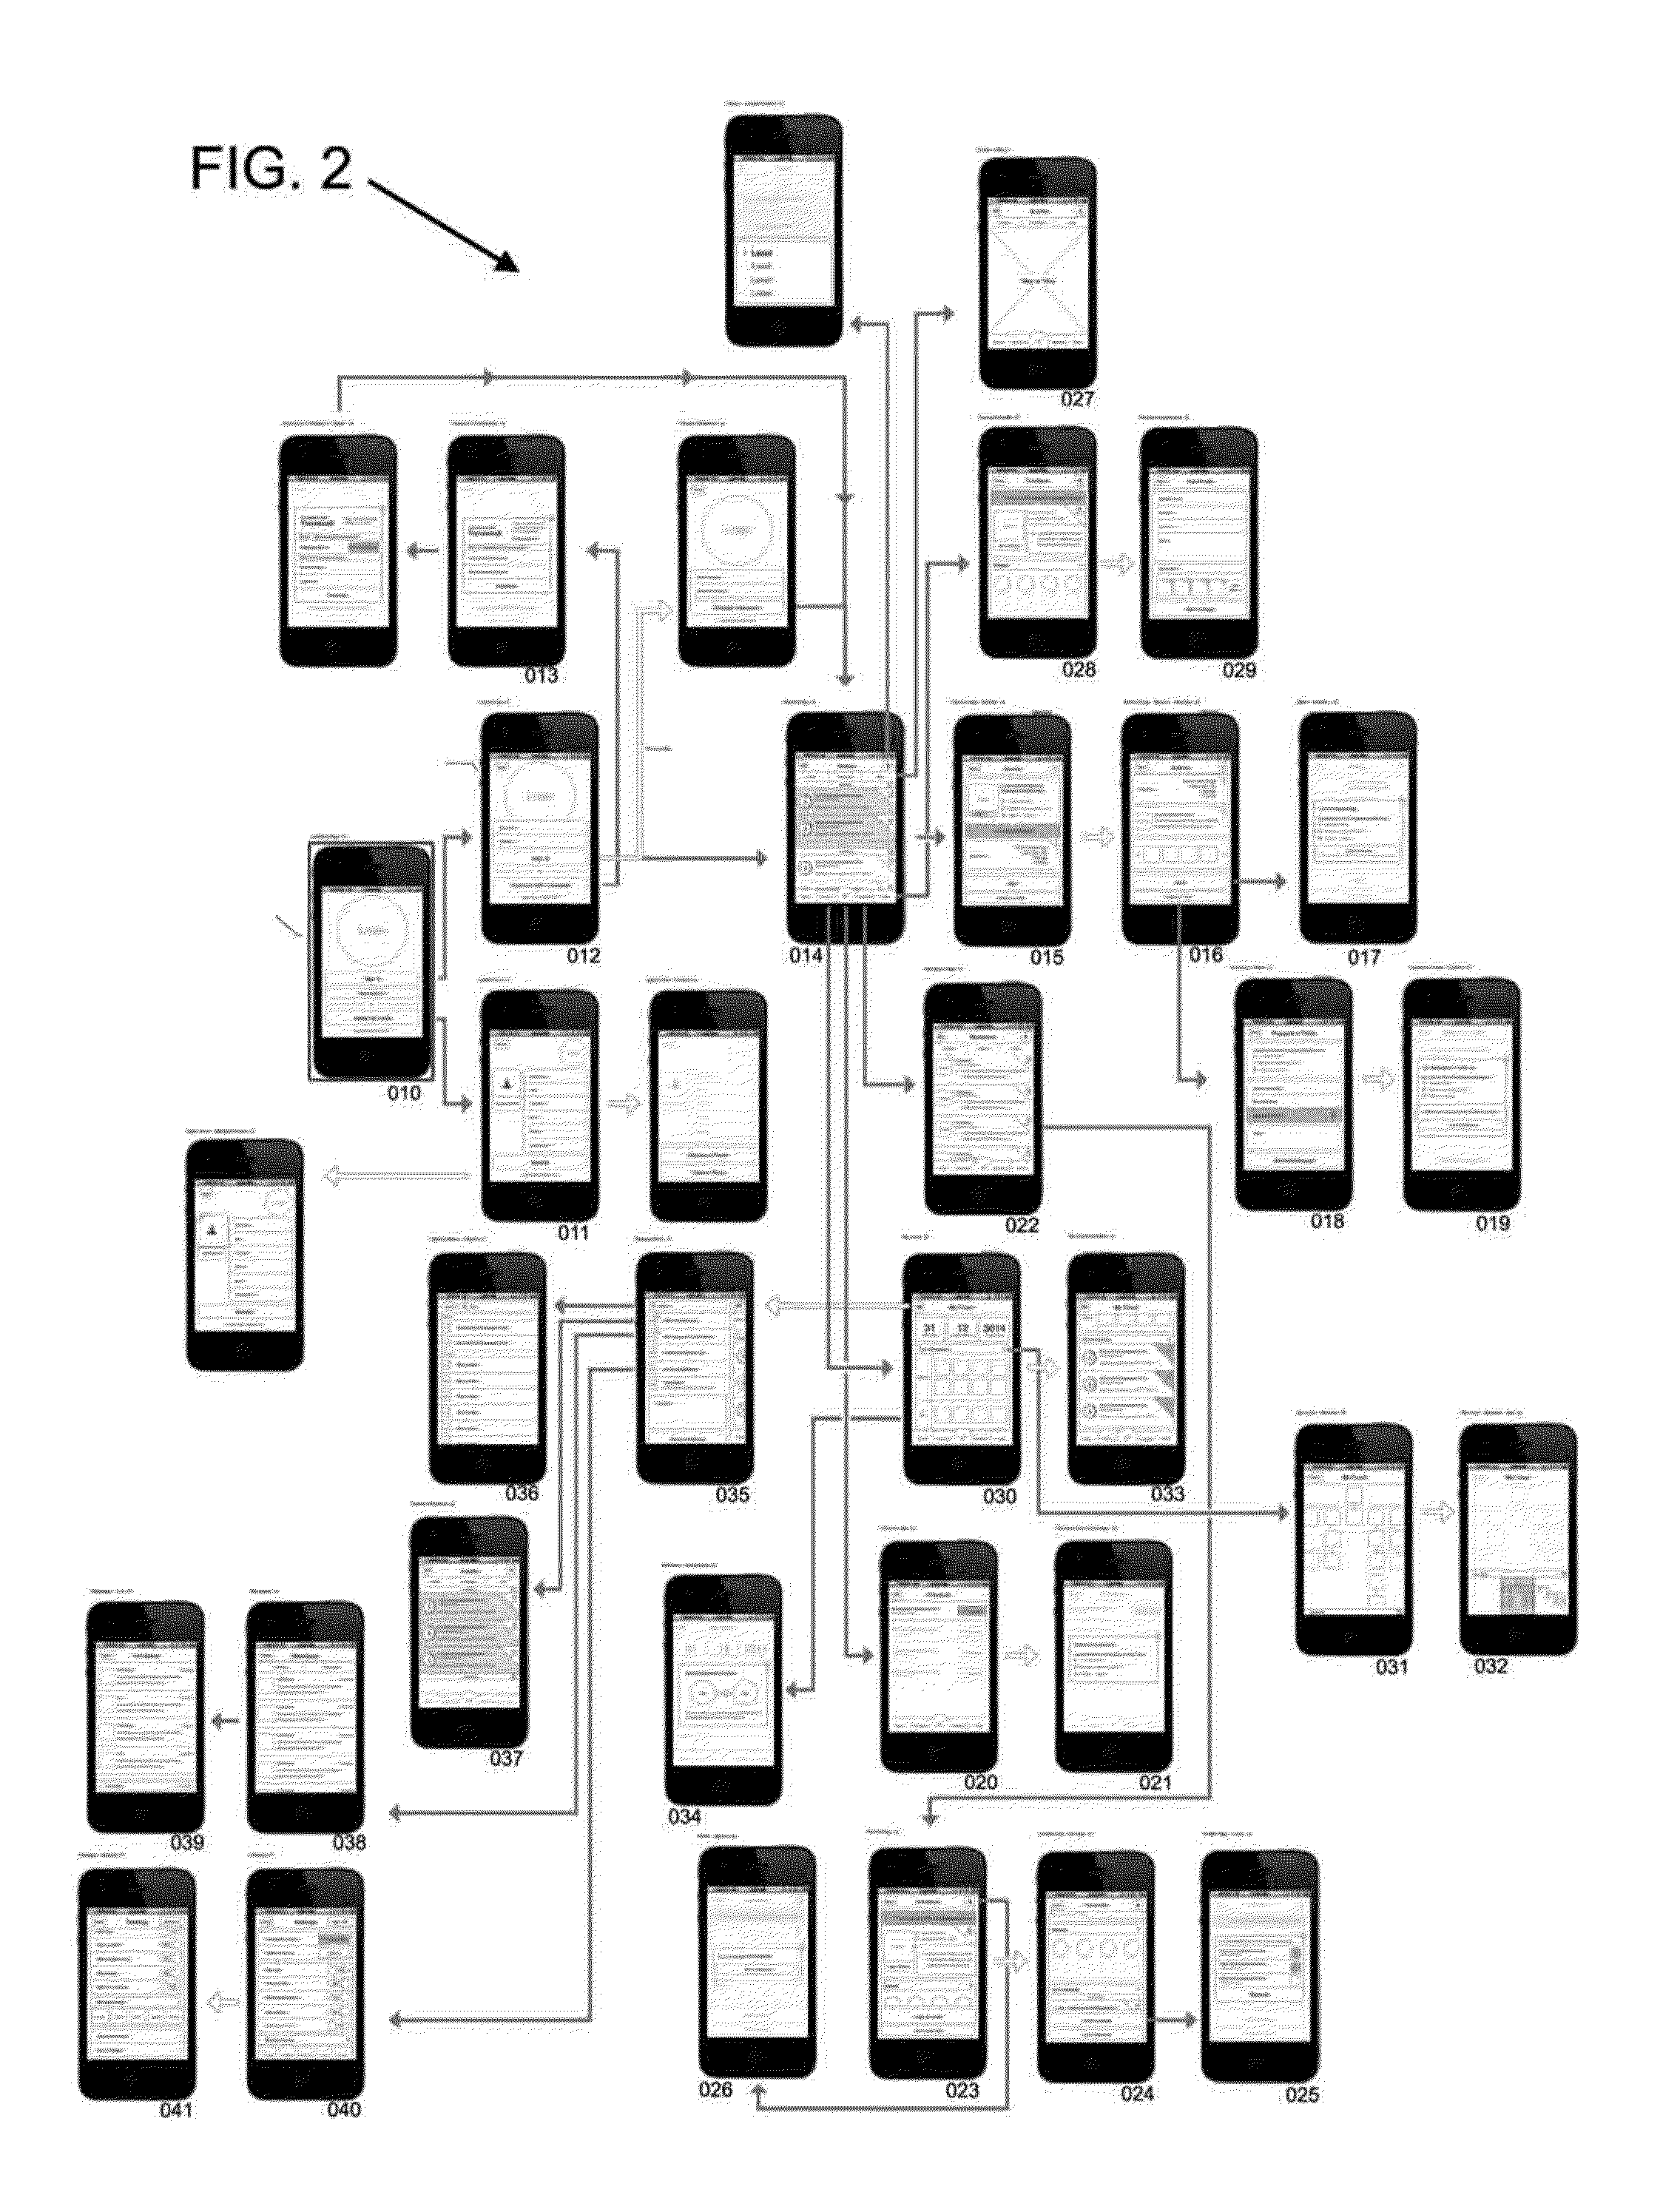 Mobile social-business network